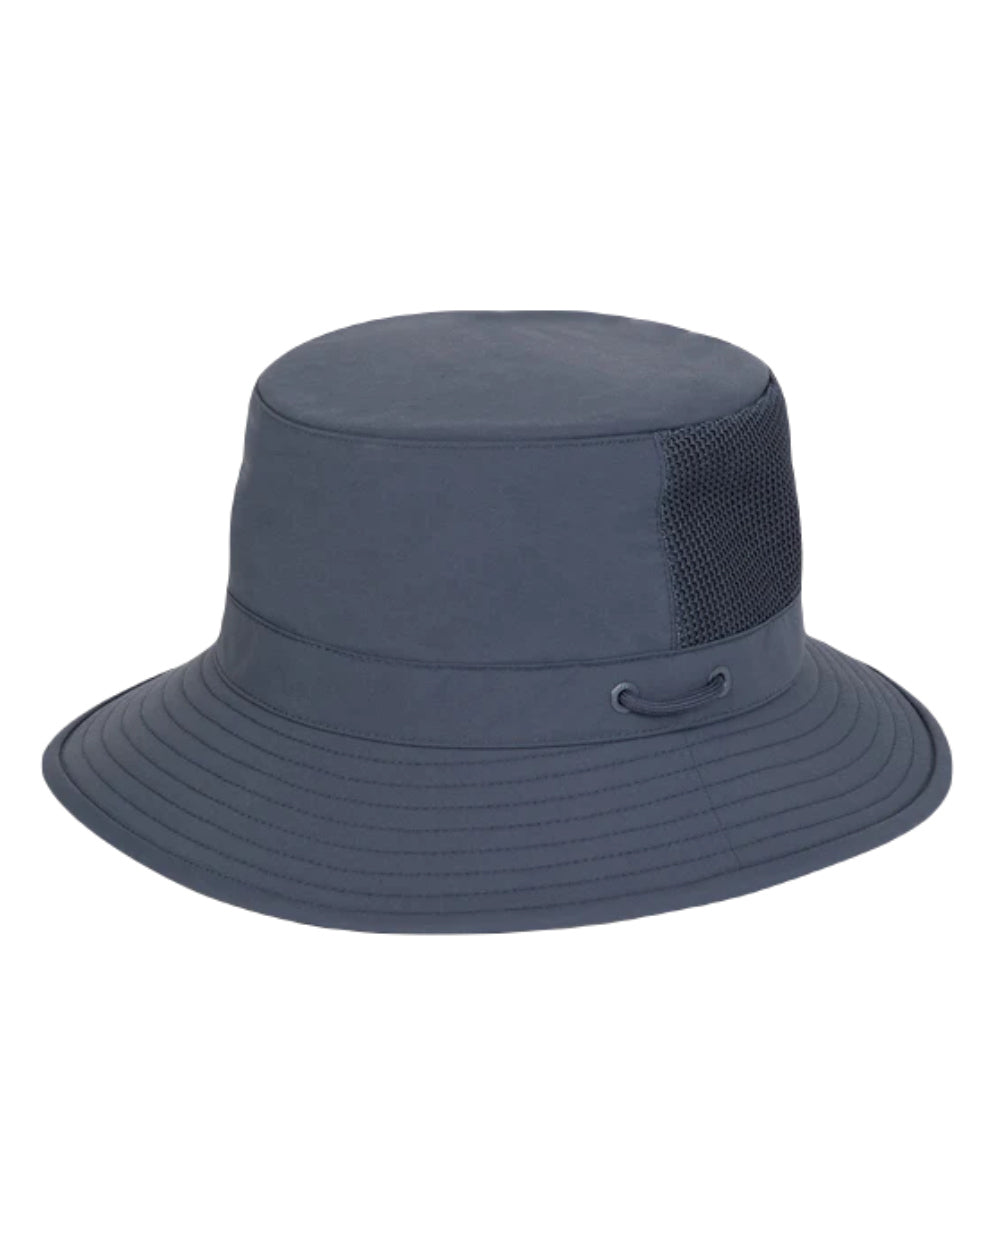 Midnight Navy Coloured Tilley Hat LTM1 Airflo Bucket On A White Background 